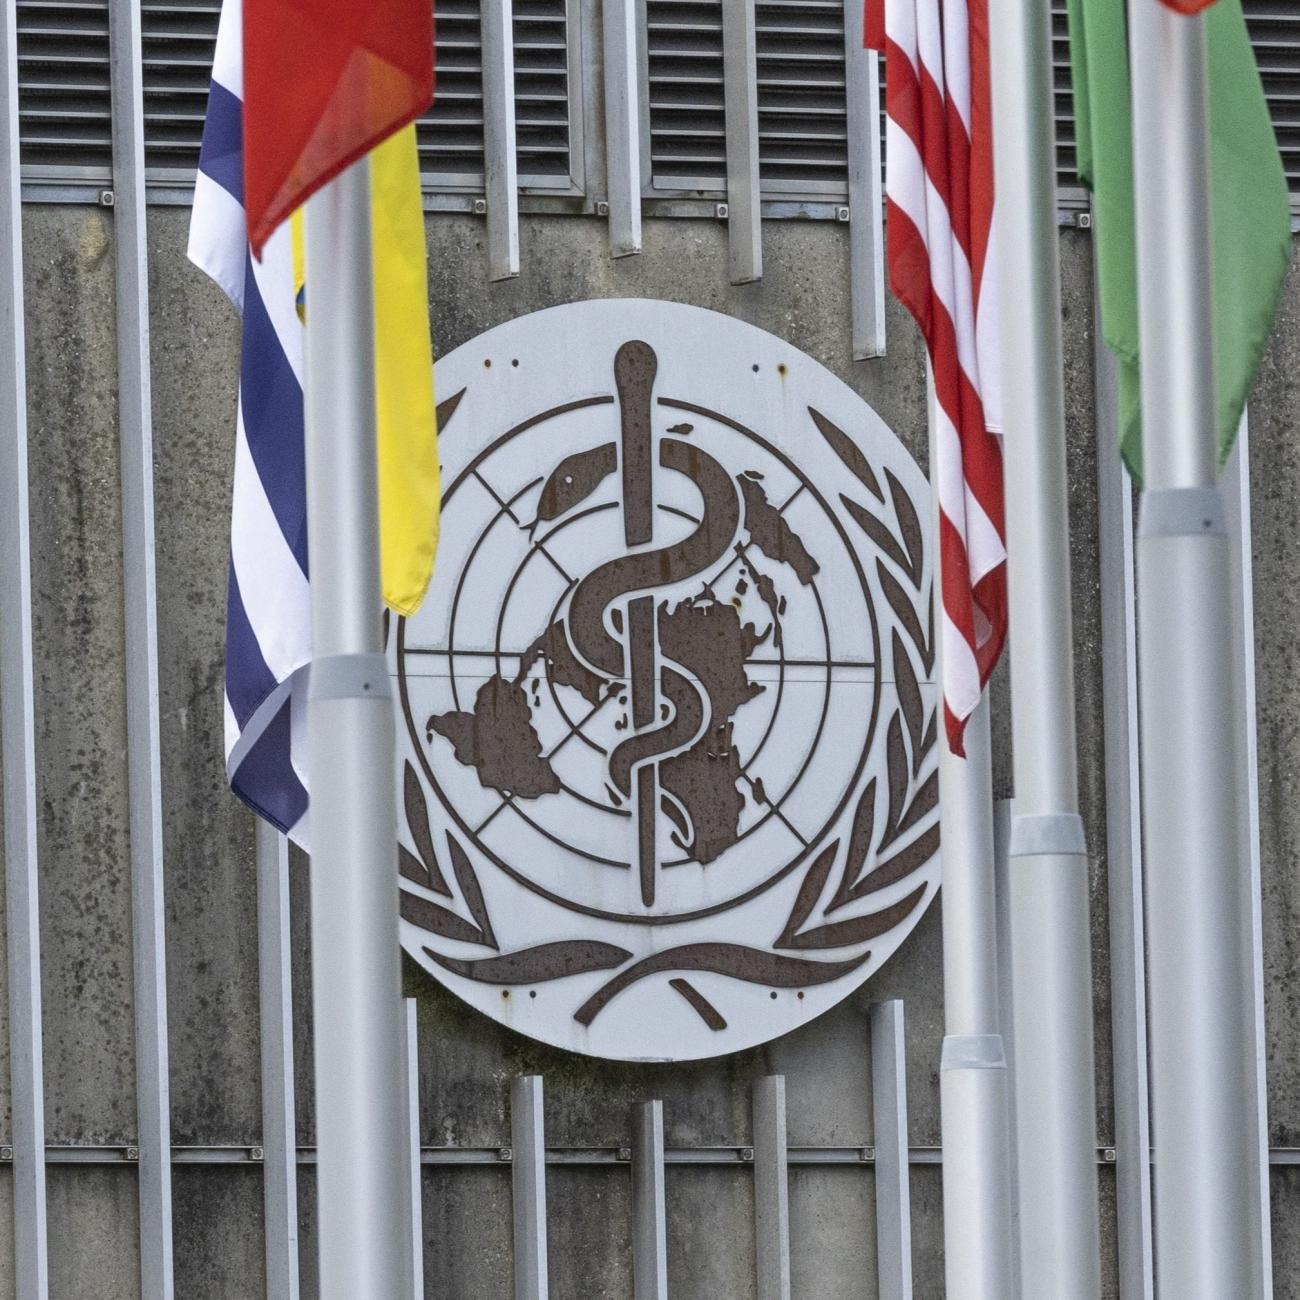 The World Health Organization (WHO) logo is seen near its headquarters.